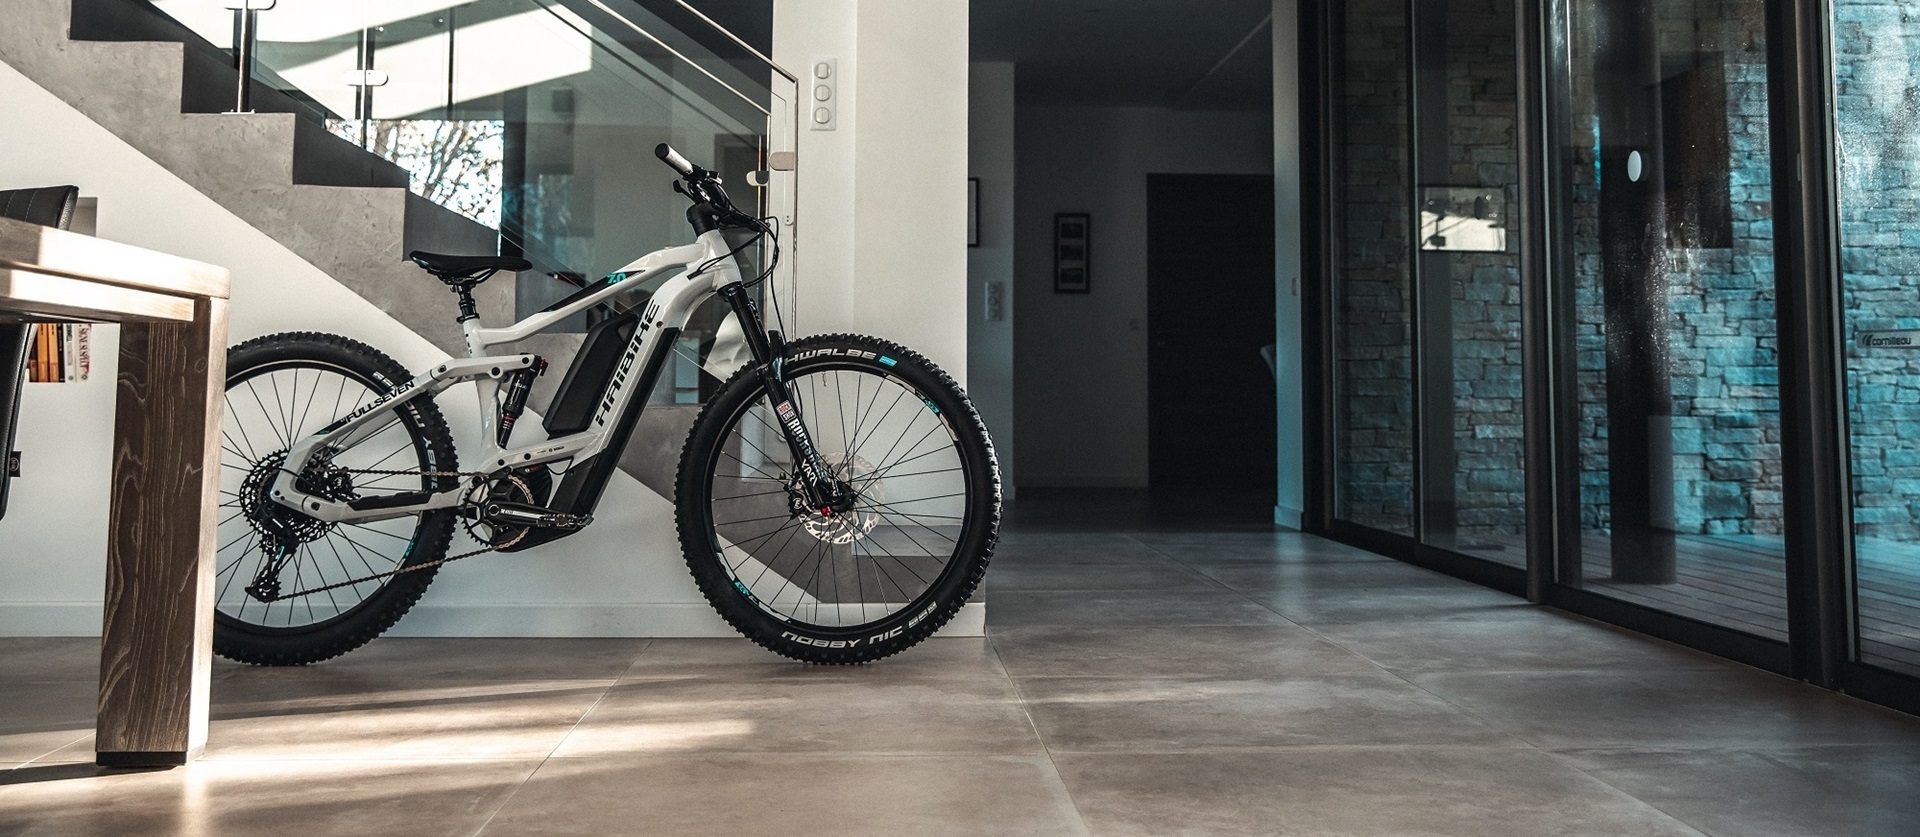 Haibike electric mountain bike in modern office hallway